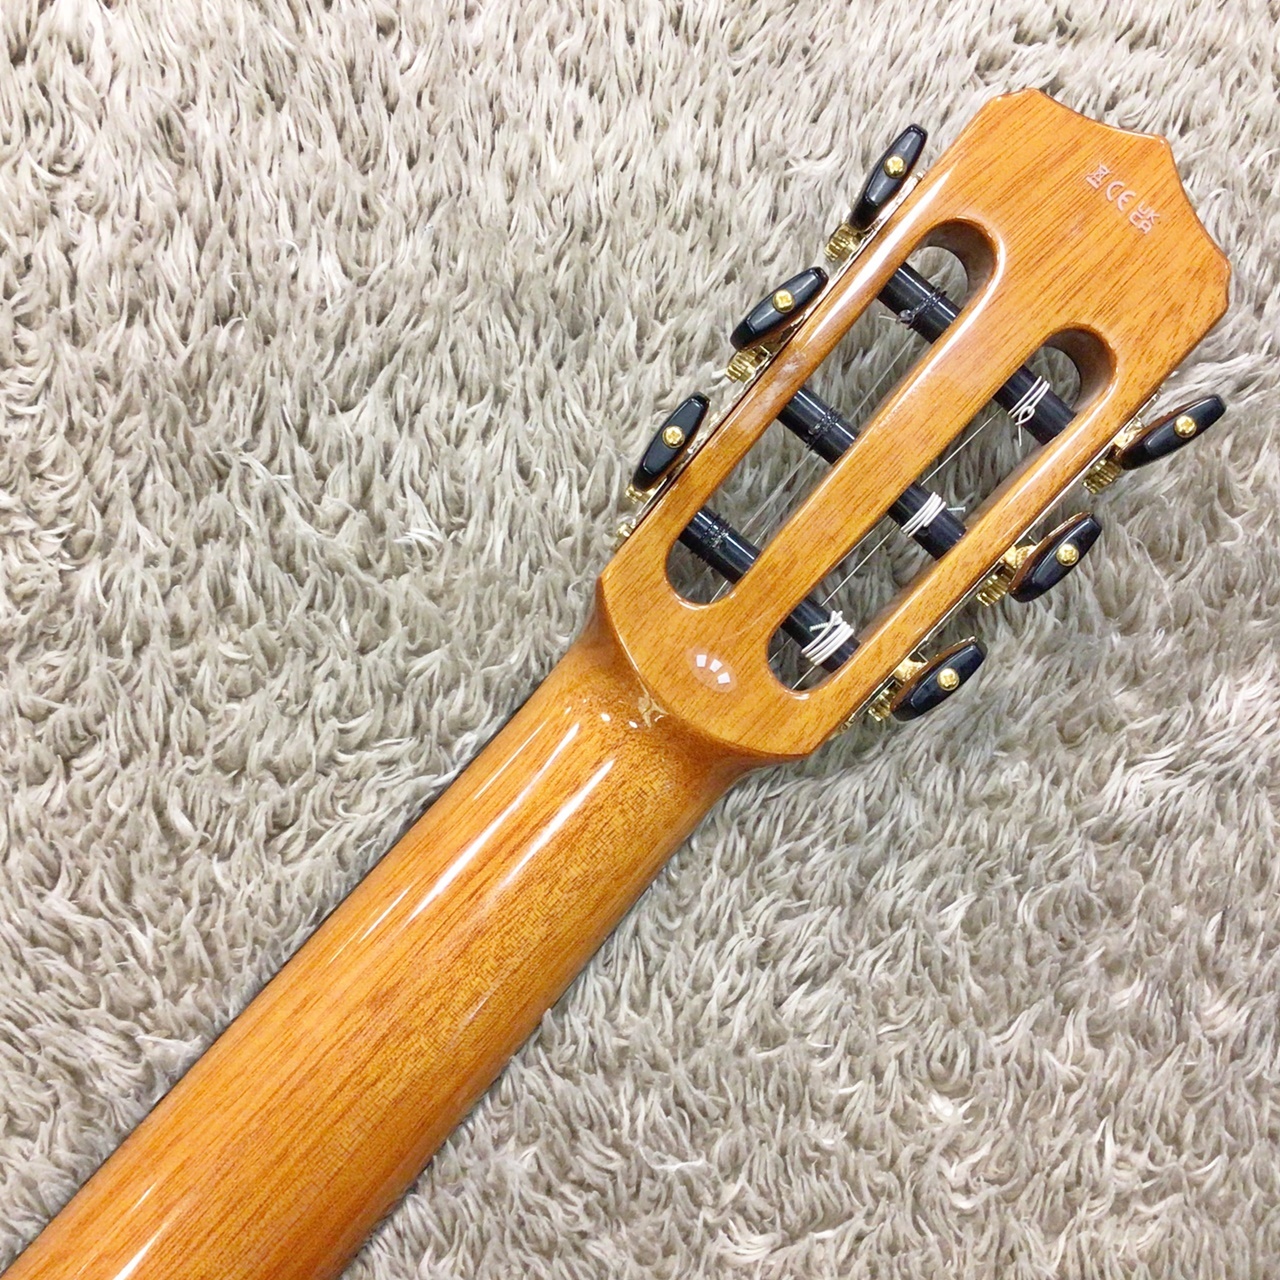 Cordoba Stage Guitar Limited Garnet【限定カラー】【エレガット】